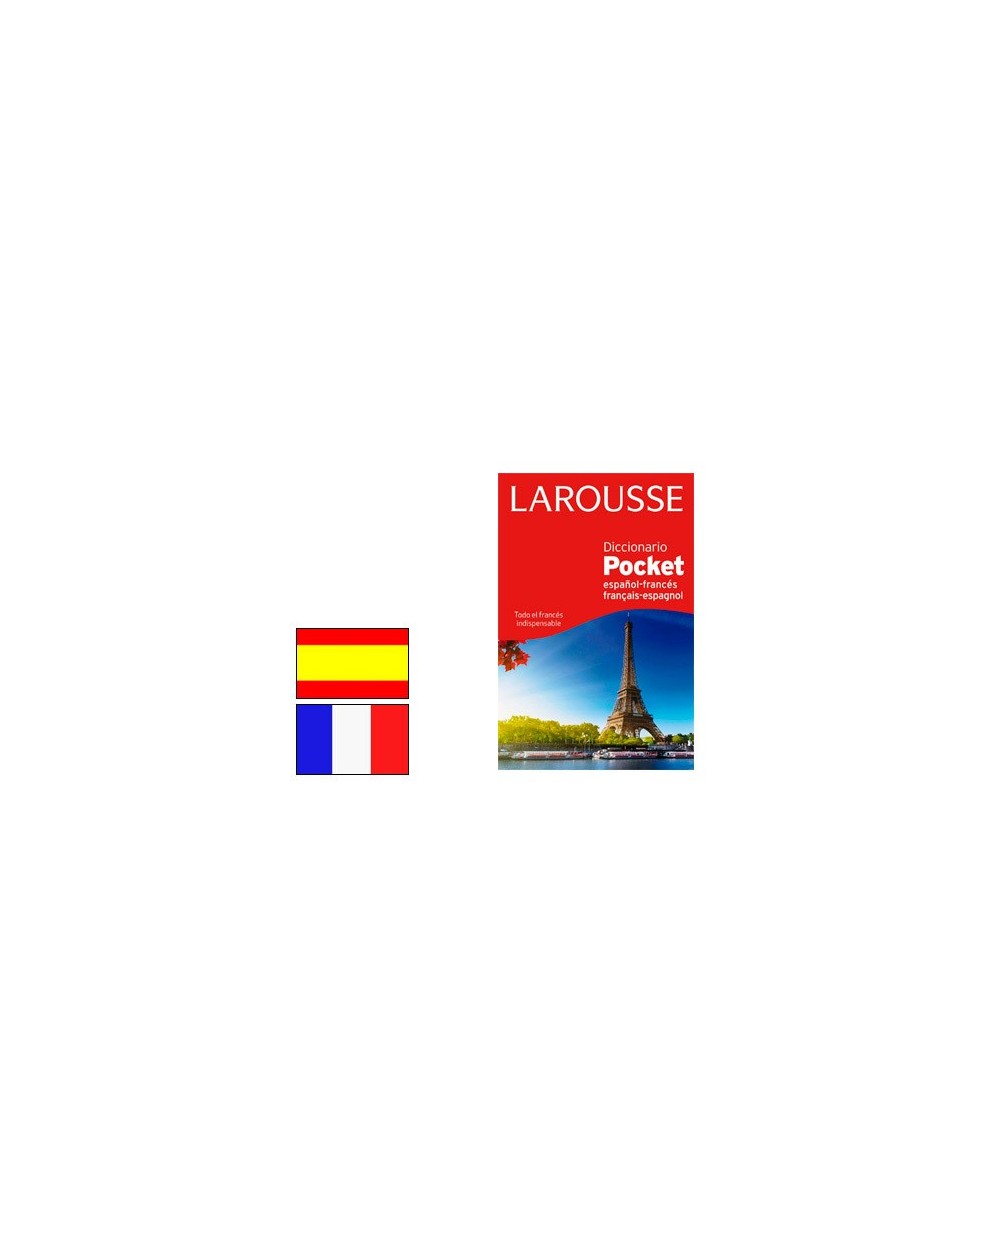 Diccionario larousse pocket frances espanol espanol frances